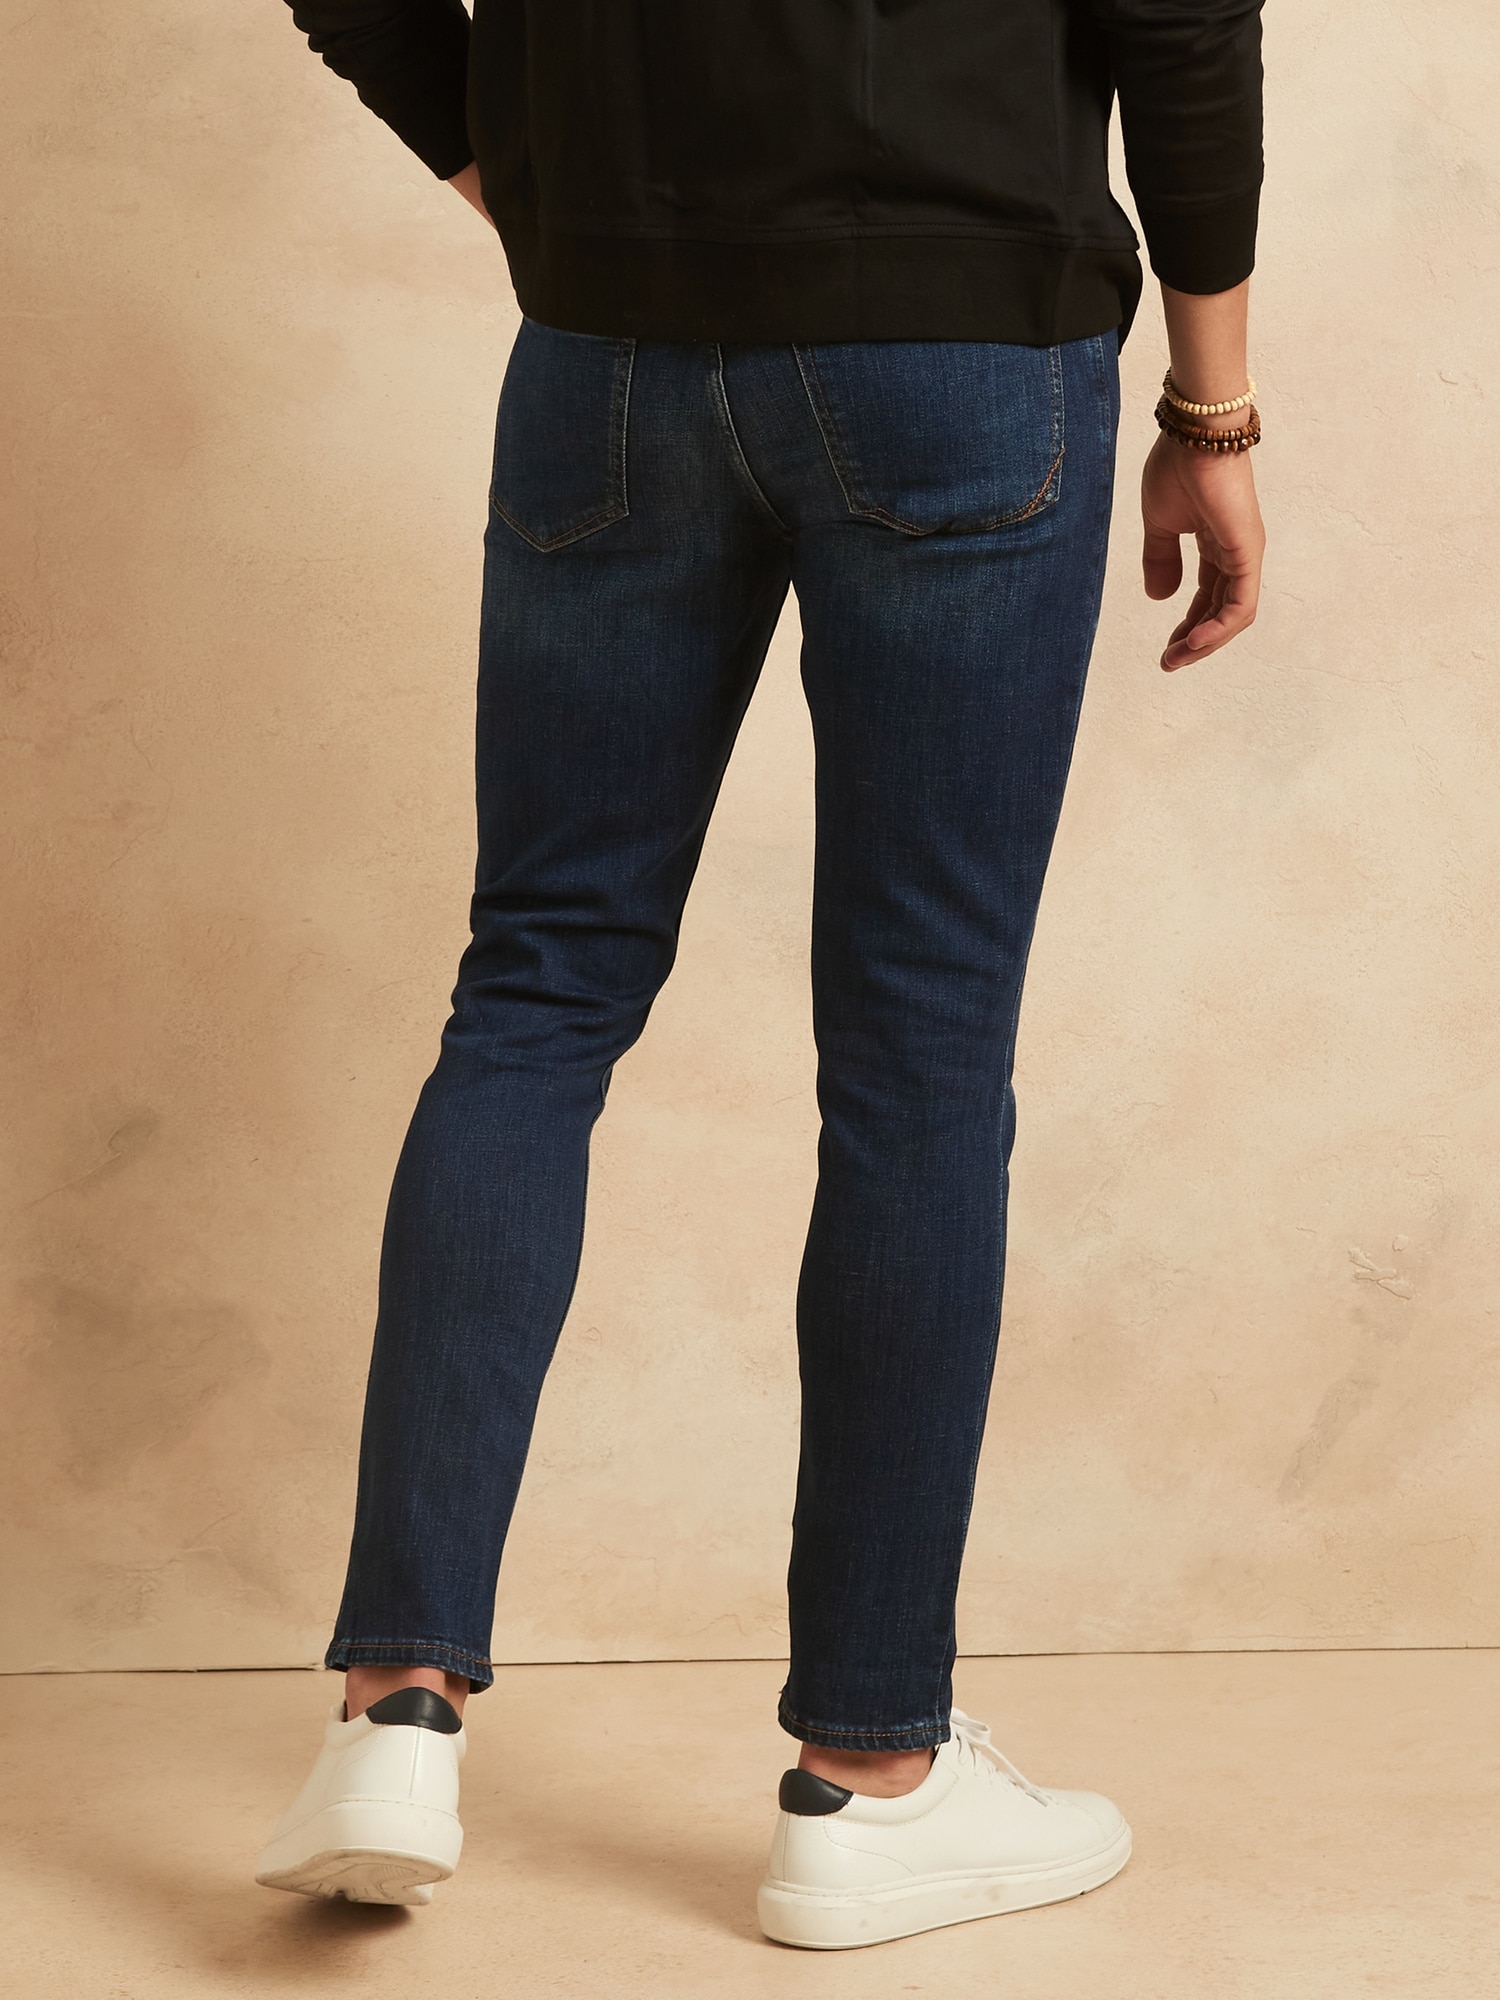 Men's jeans Slim Skinny fit premium Stretch denim J315B 